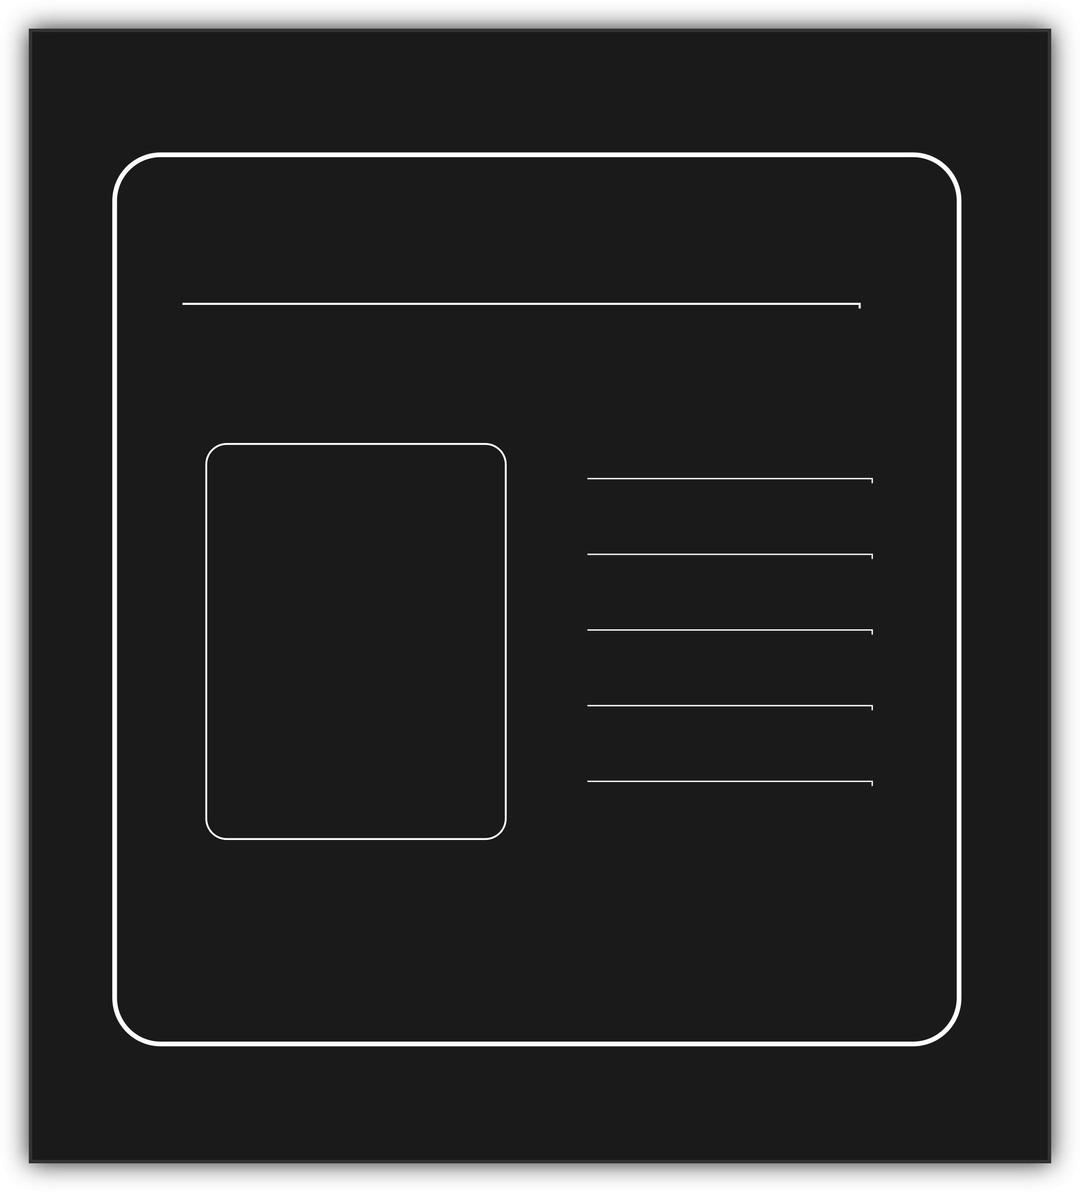 Monochrome Presentation icon png transparent